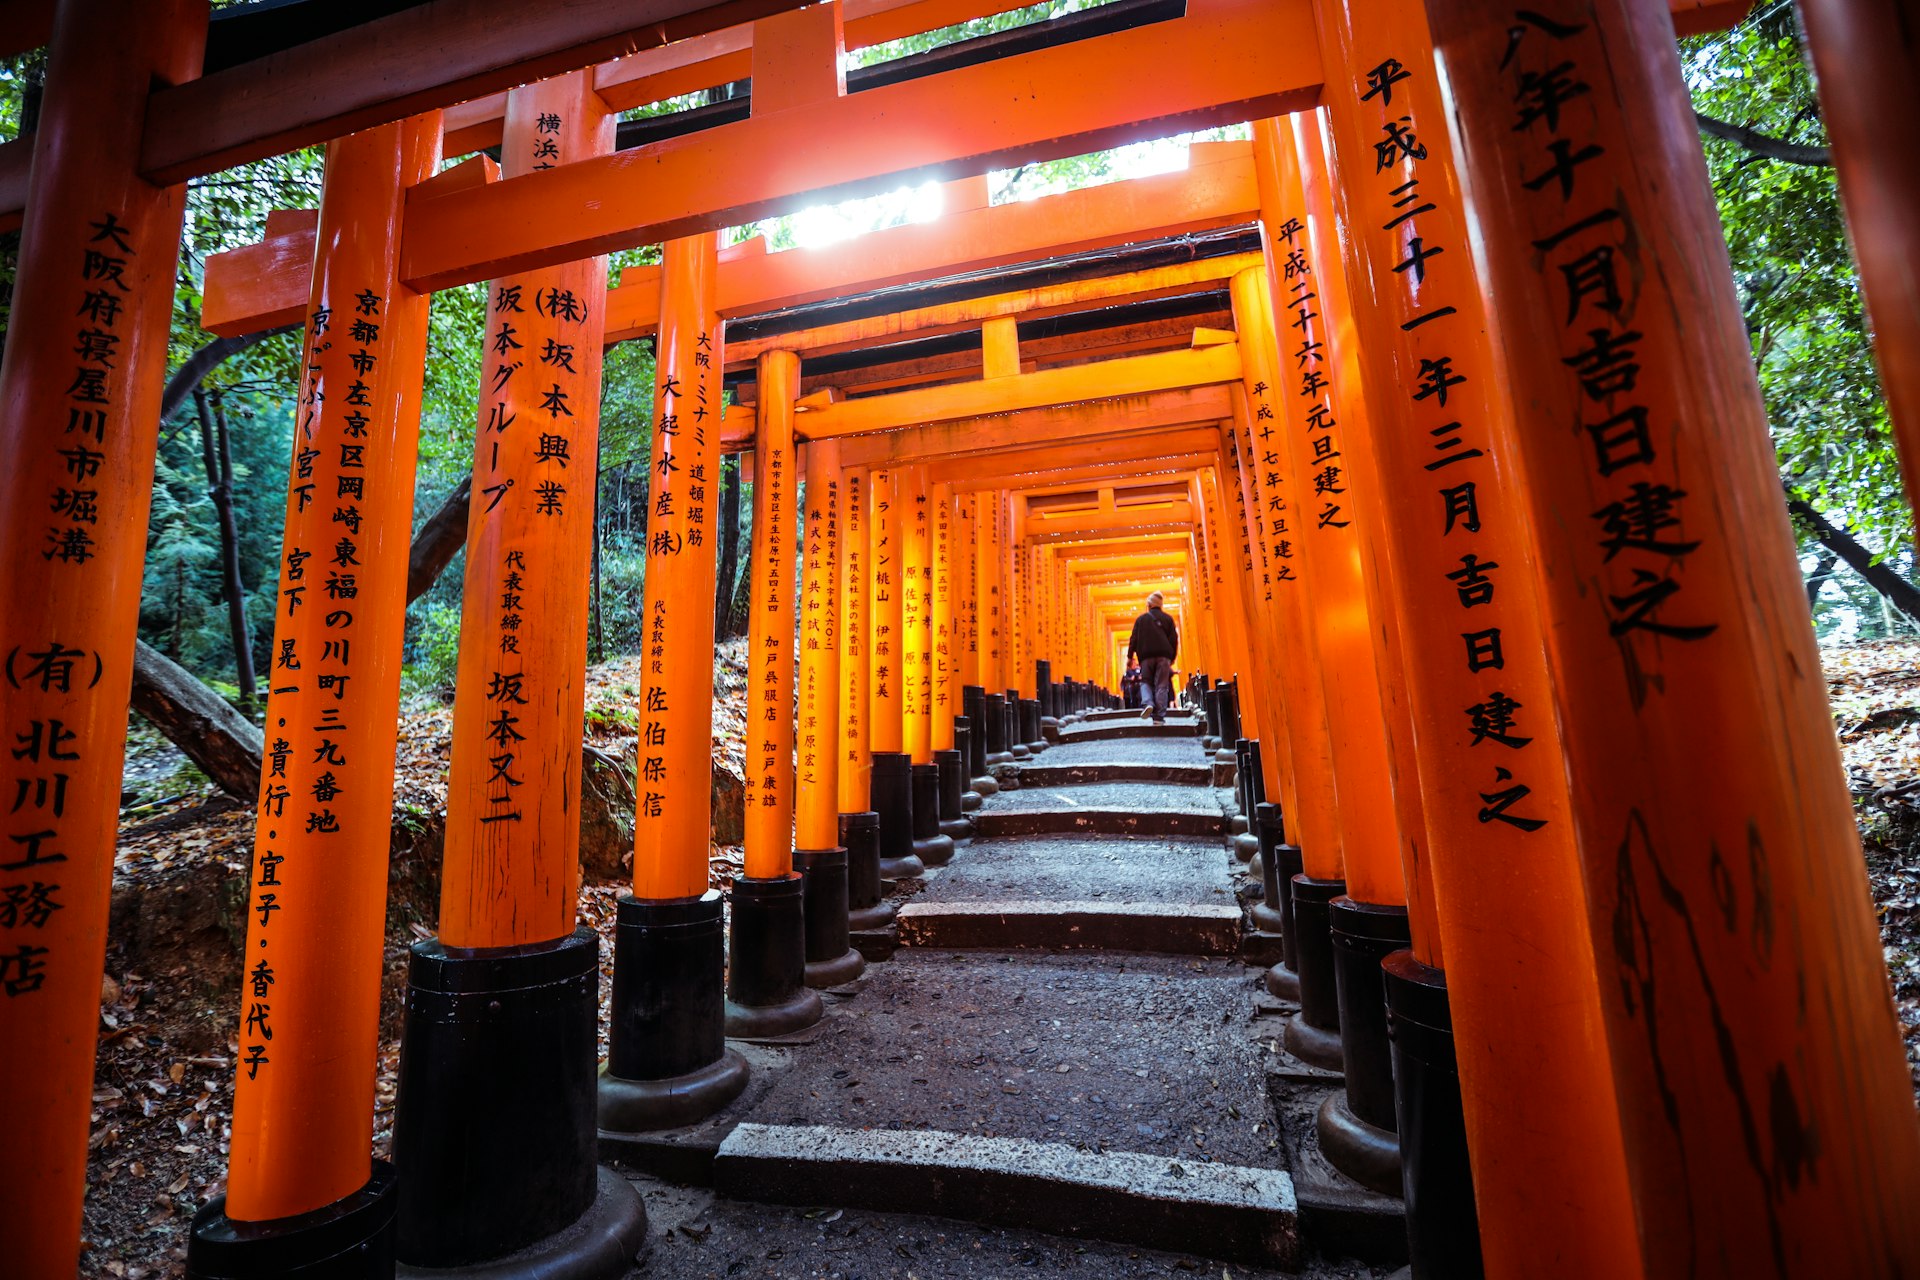 A man walks through the in the Great Torii way of Fushimi Inari Shrine, Kyoto, Japan